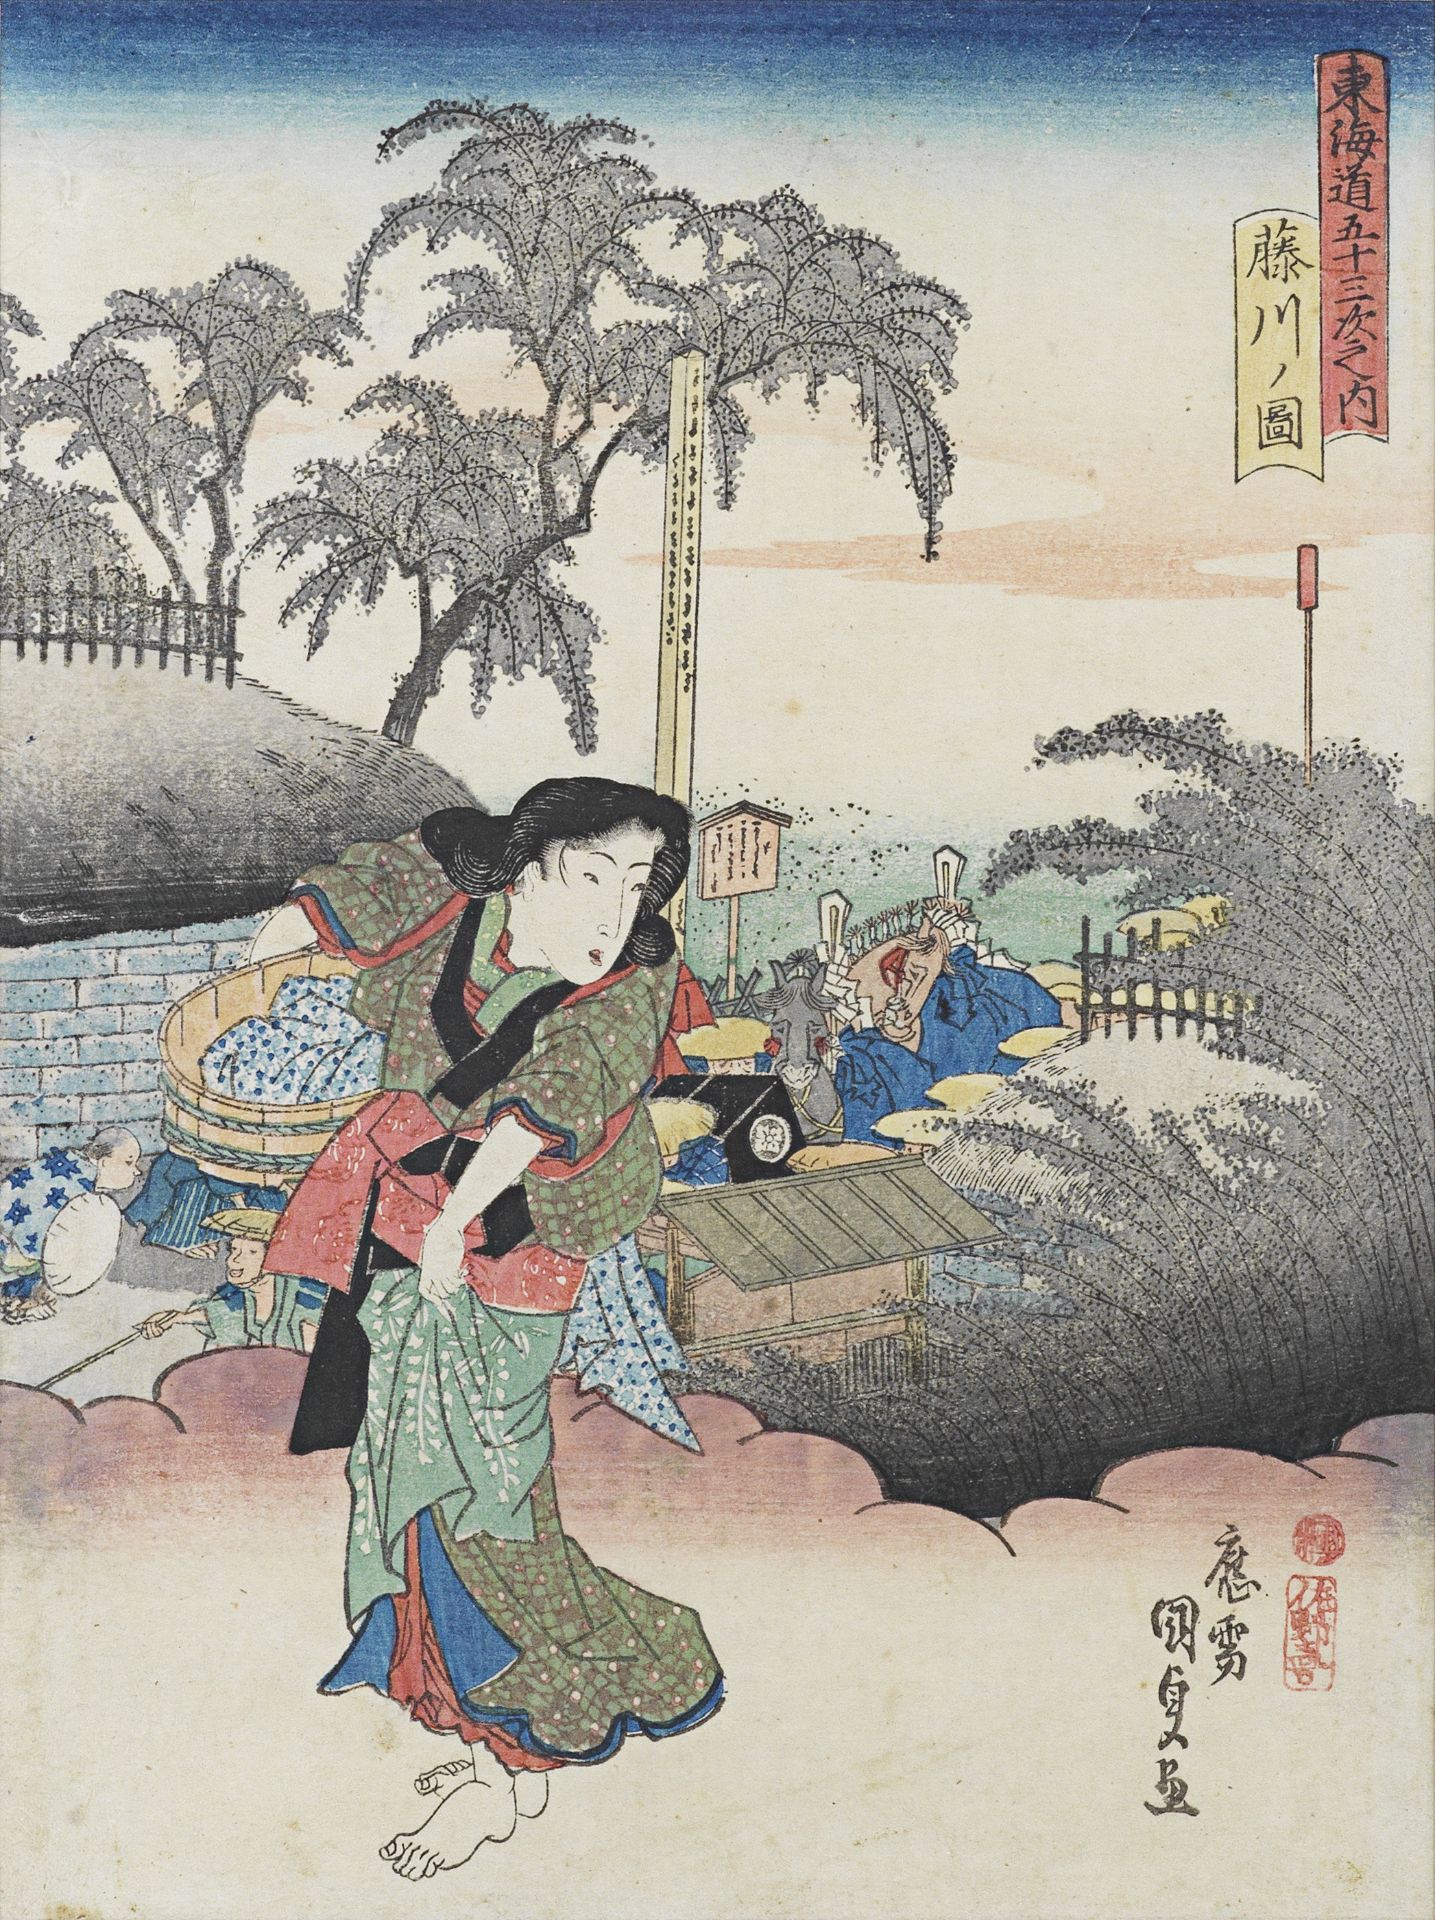 UTAGAWA KUNISADA (UTAGAWA TOYOKUNI III, 1786-1865) Edo period (1615-1868), circa 1838